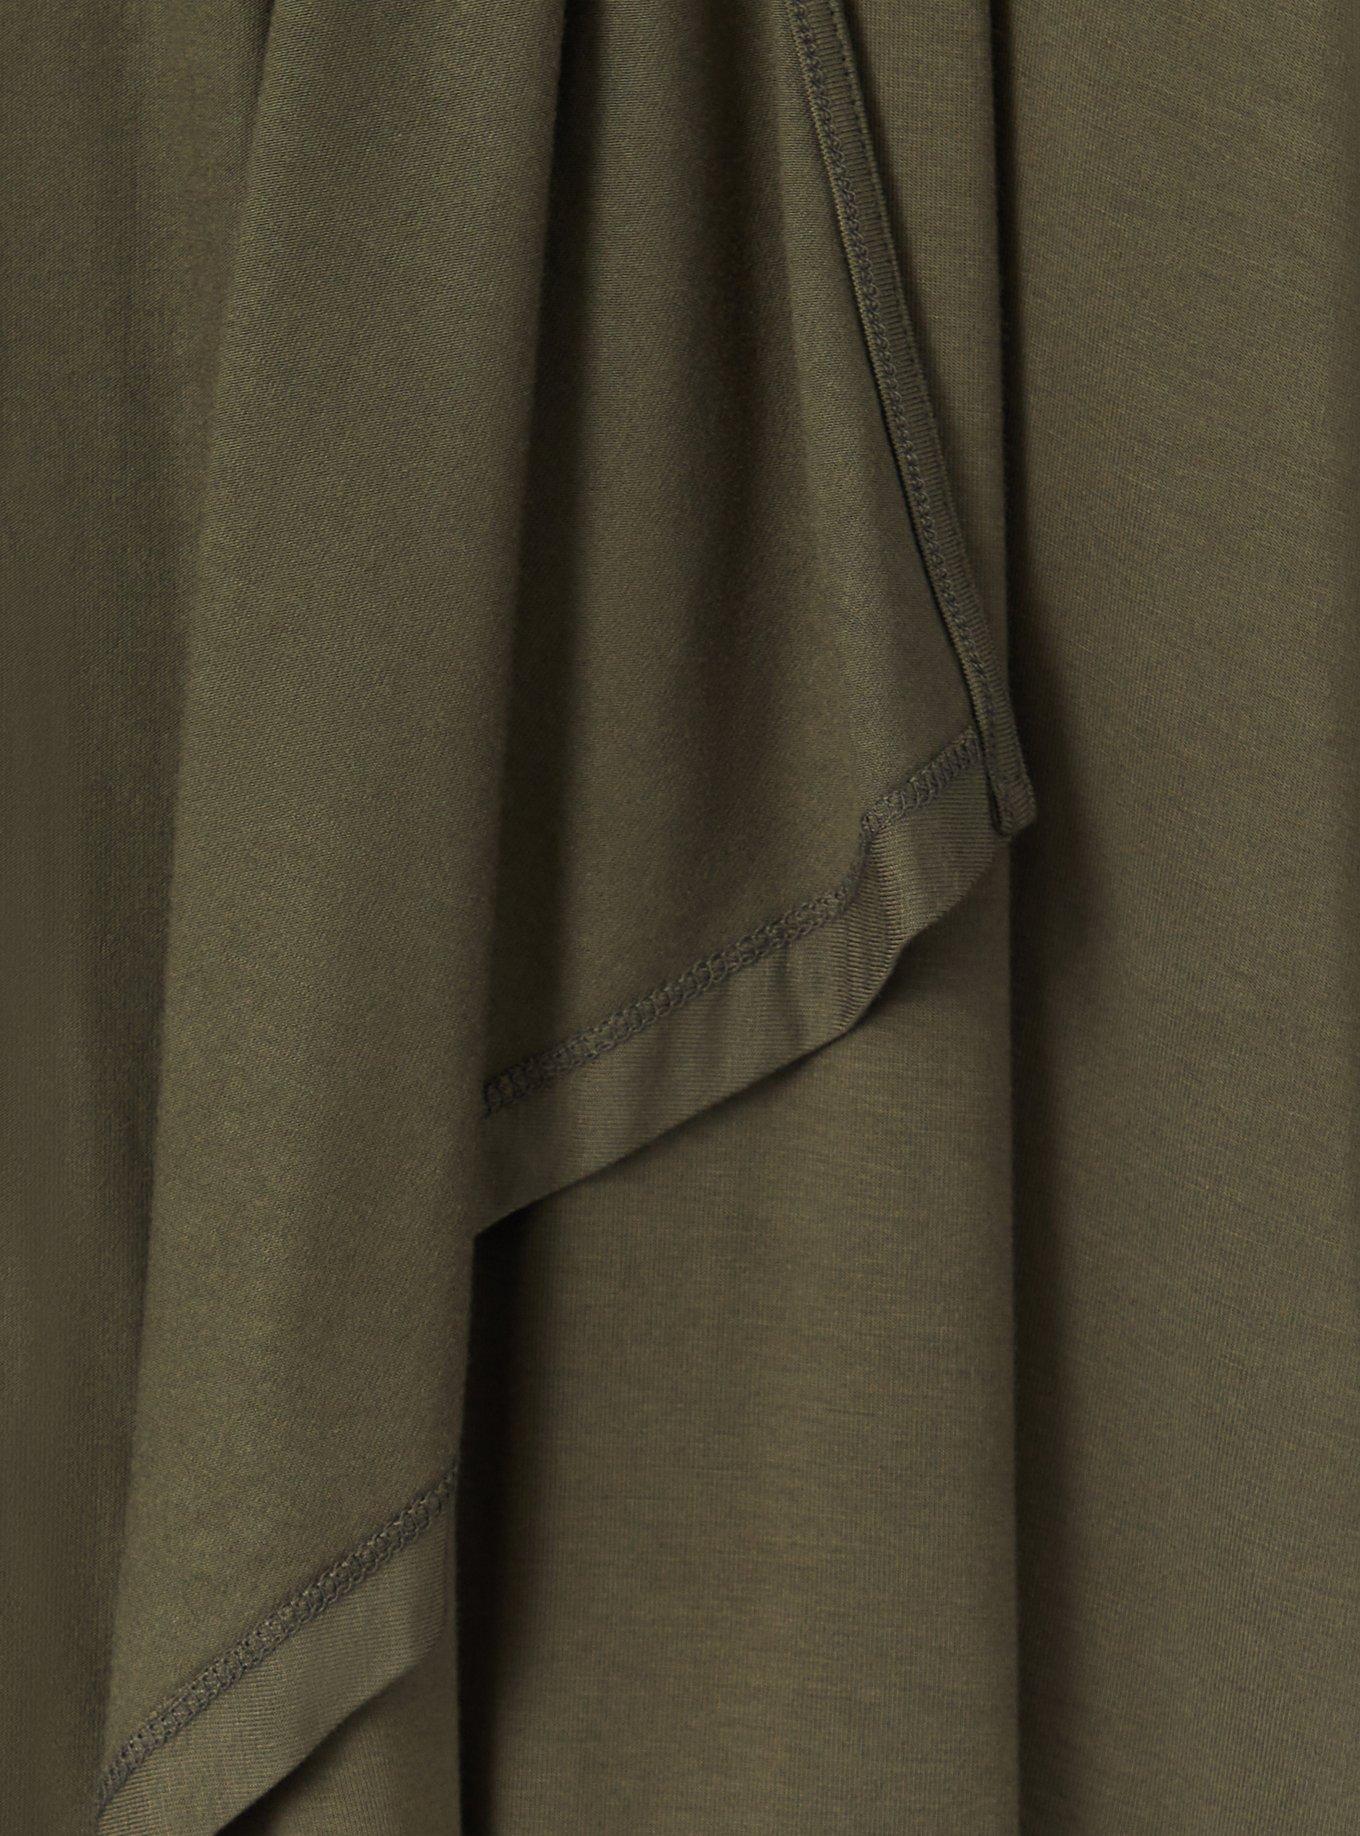 Olive Green Drape Front Sheer Knit Cardigan.Torrid. Plus Size 3X